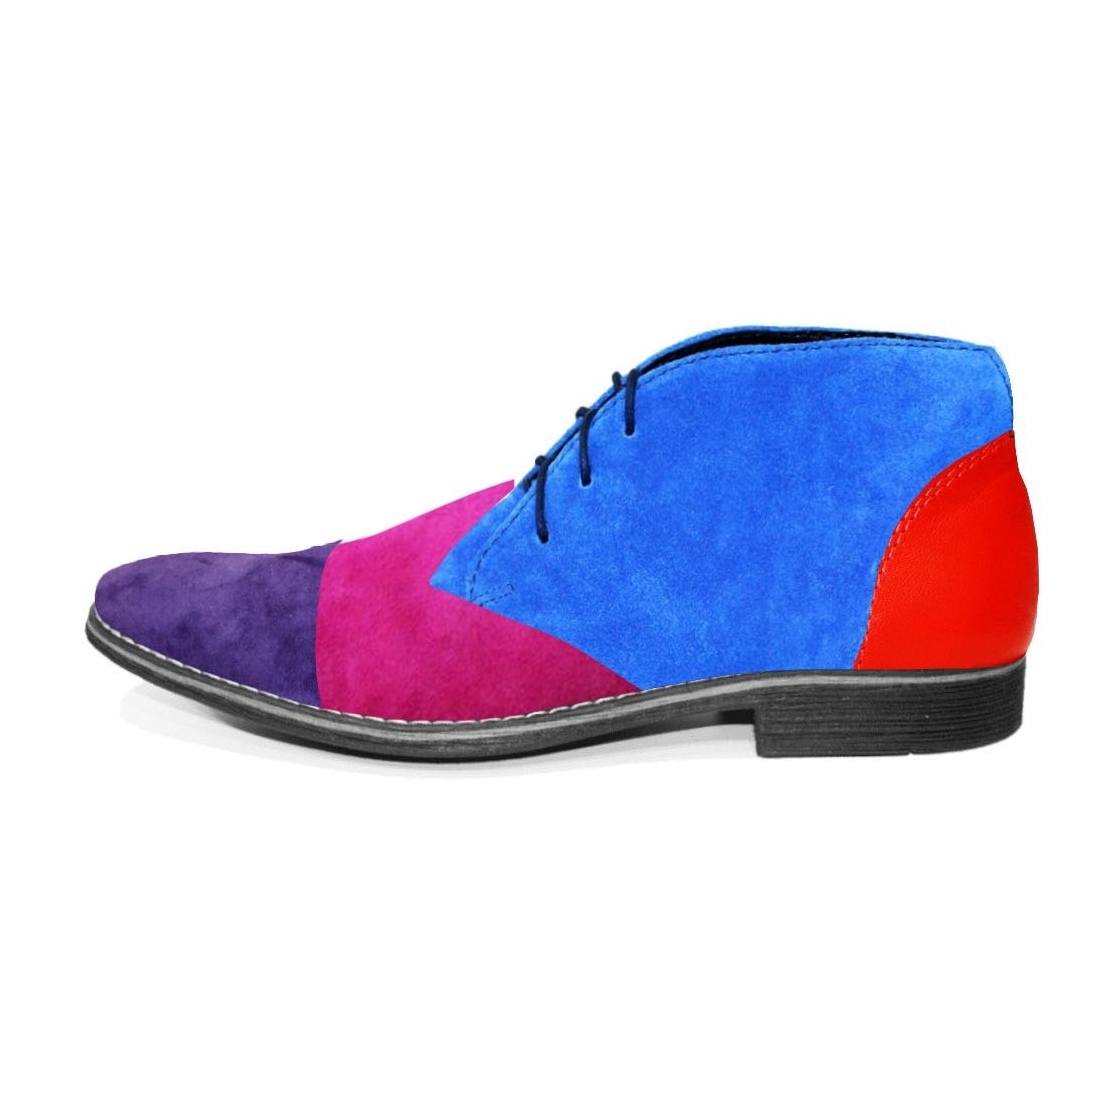 Modello Nocerro - Chukka Boots - Handmade Colorful Italian Leather Shoes